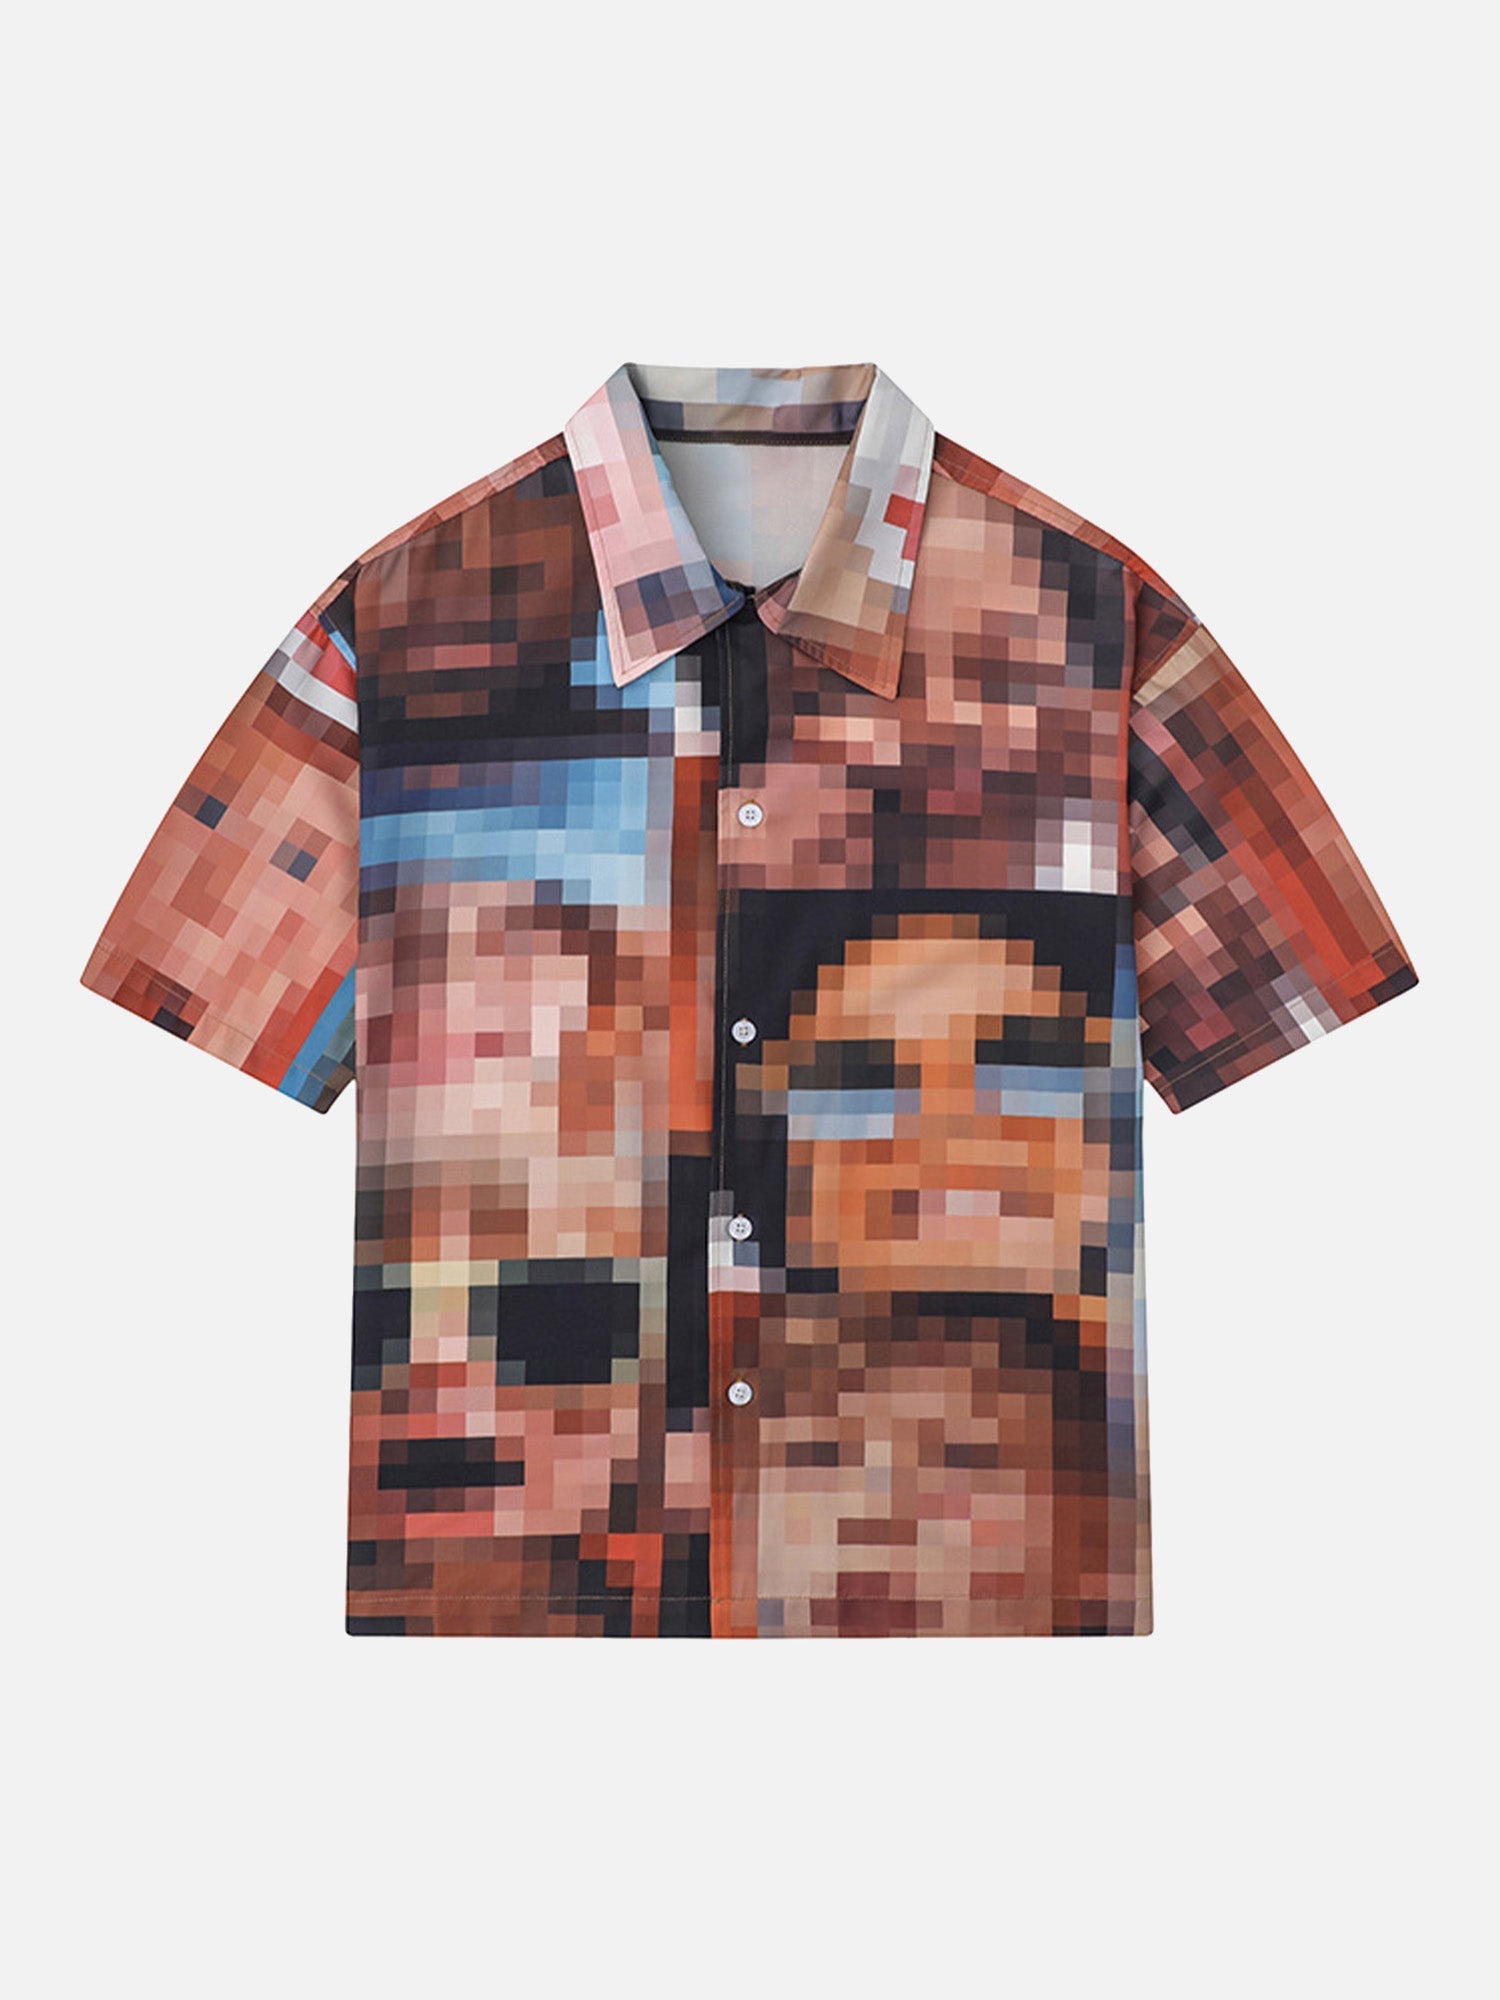 Thesupermade Rap Characters Printed Mosaic Shirts